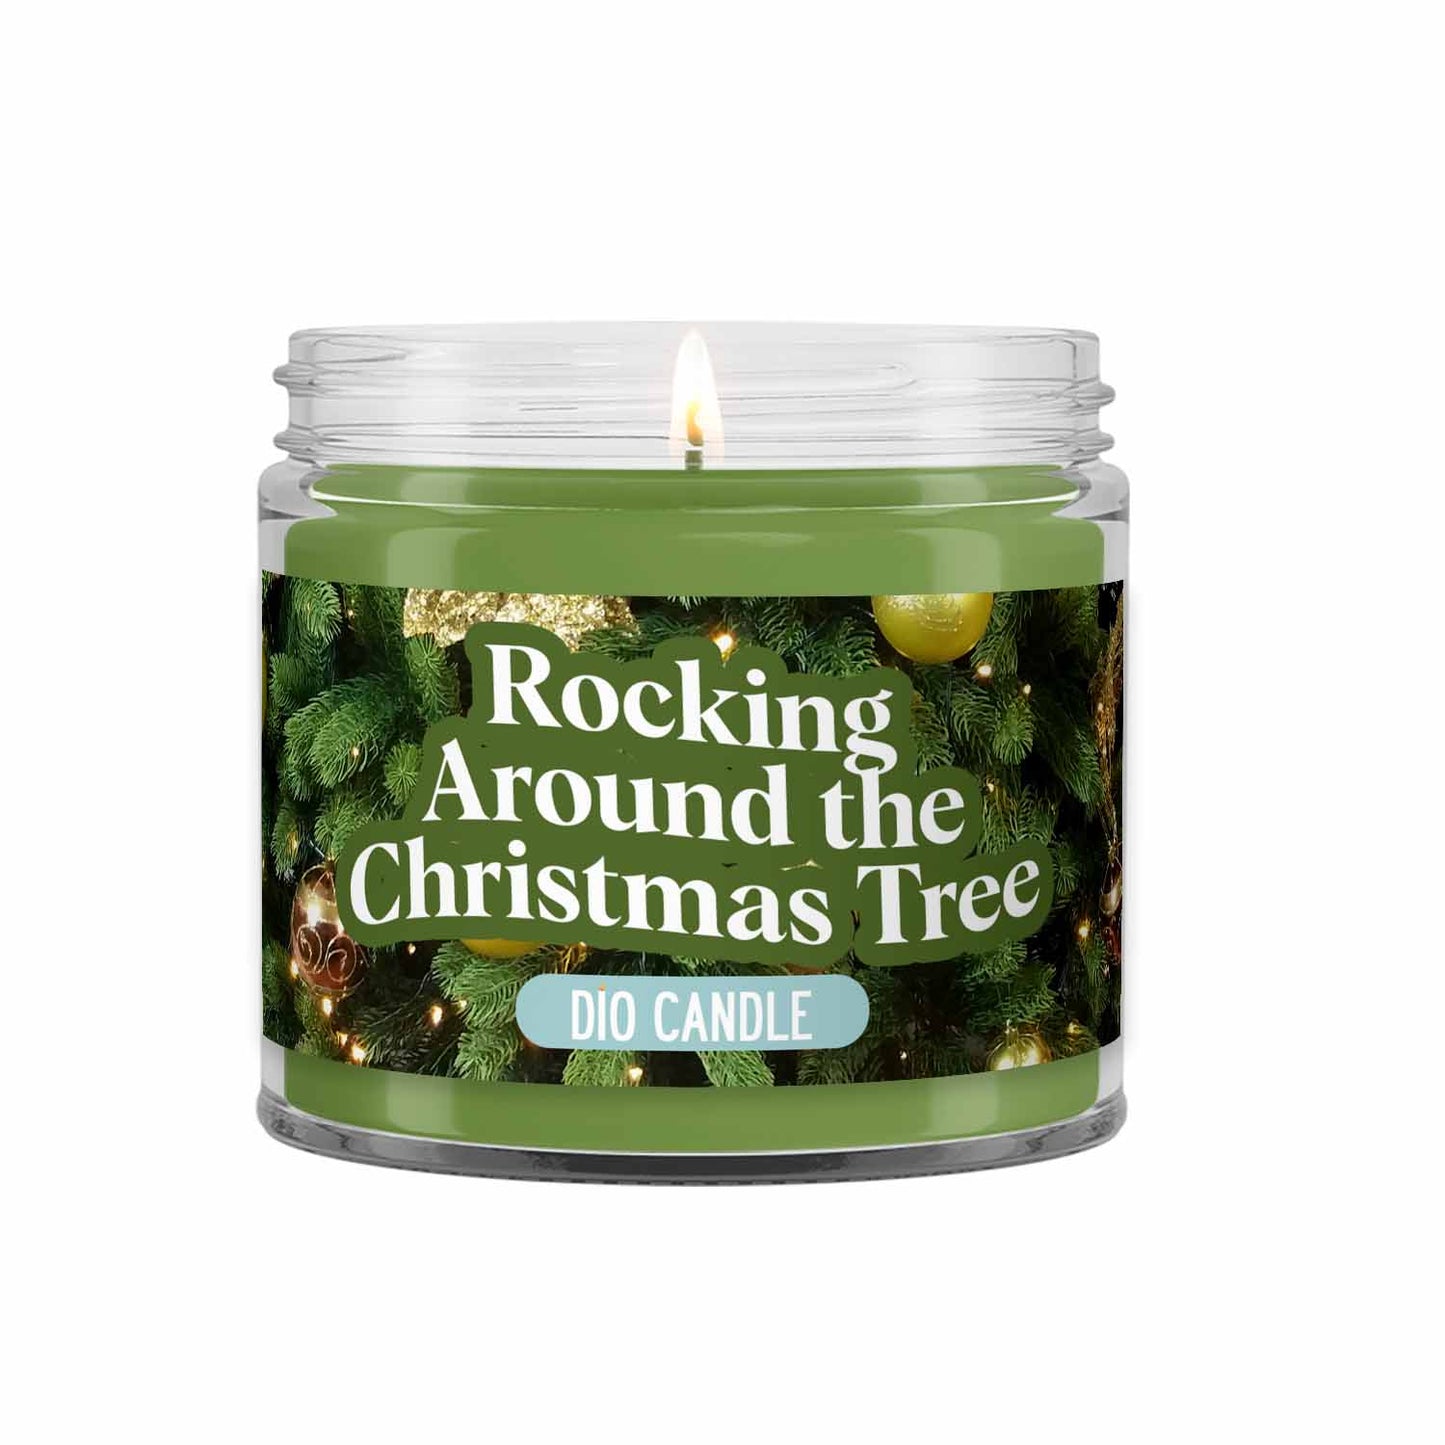 Rocking Around the Christmas Tree Candle